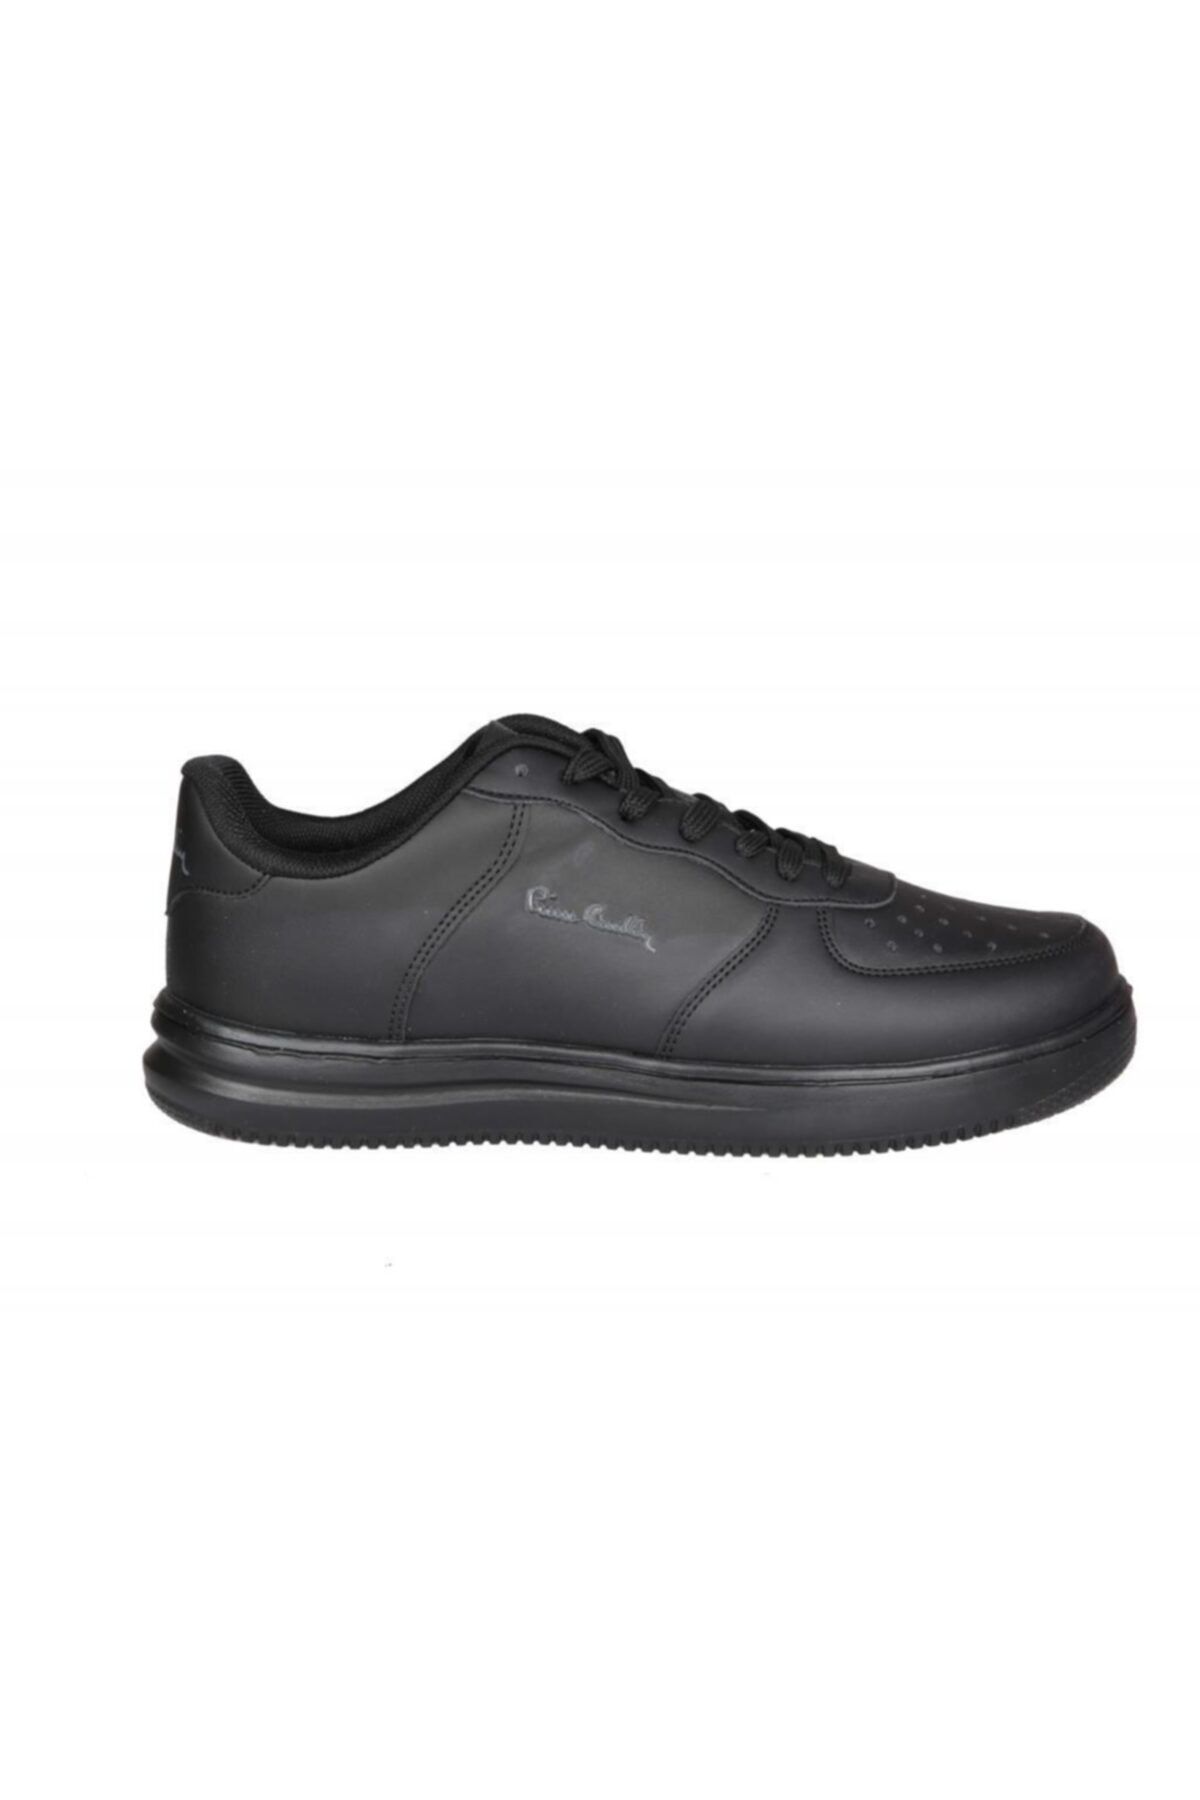 Pierre Cardin Erkek  Siyah Sneakers Pcs-10155